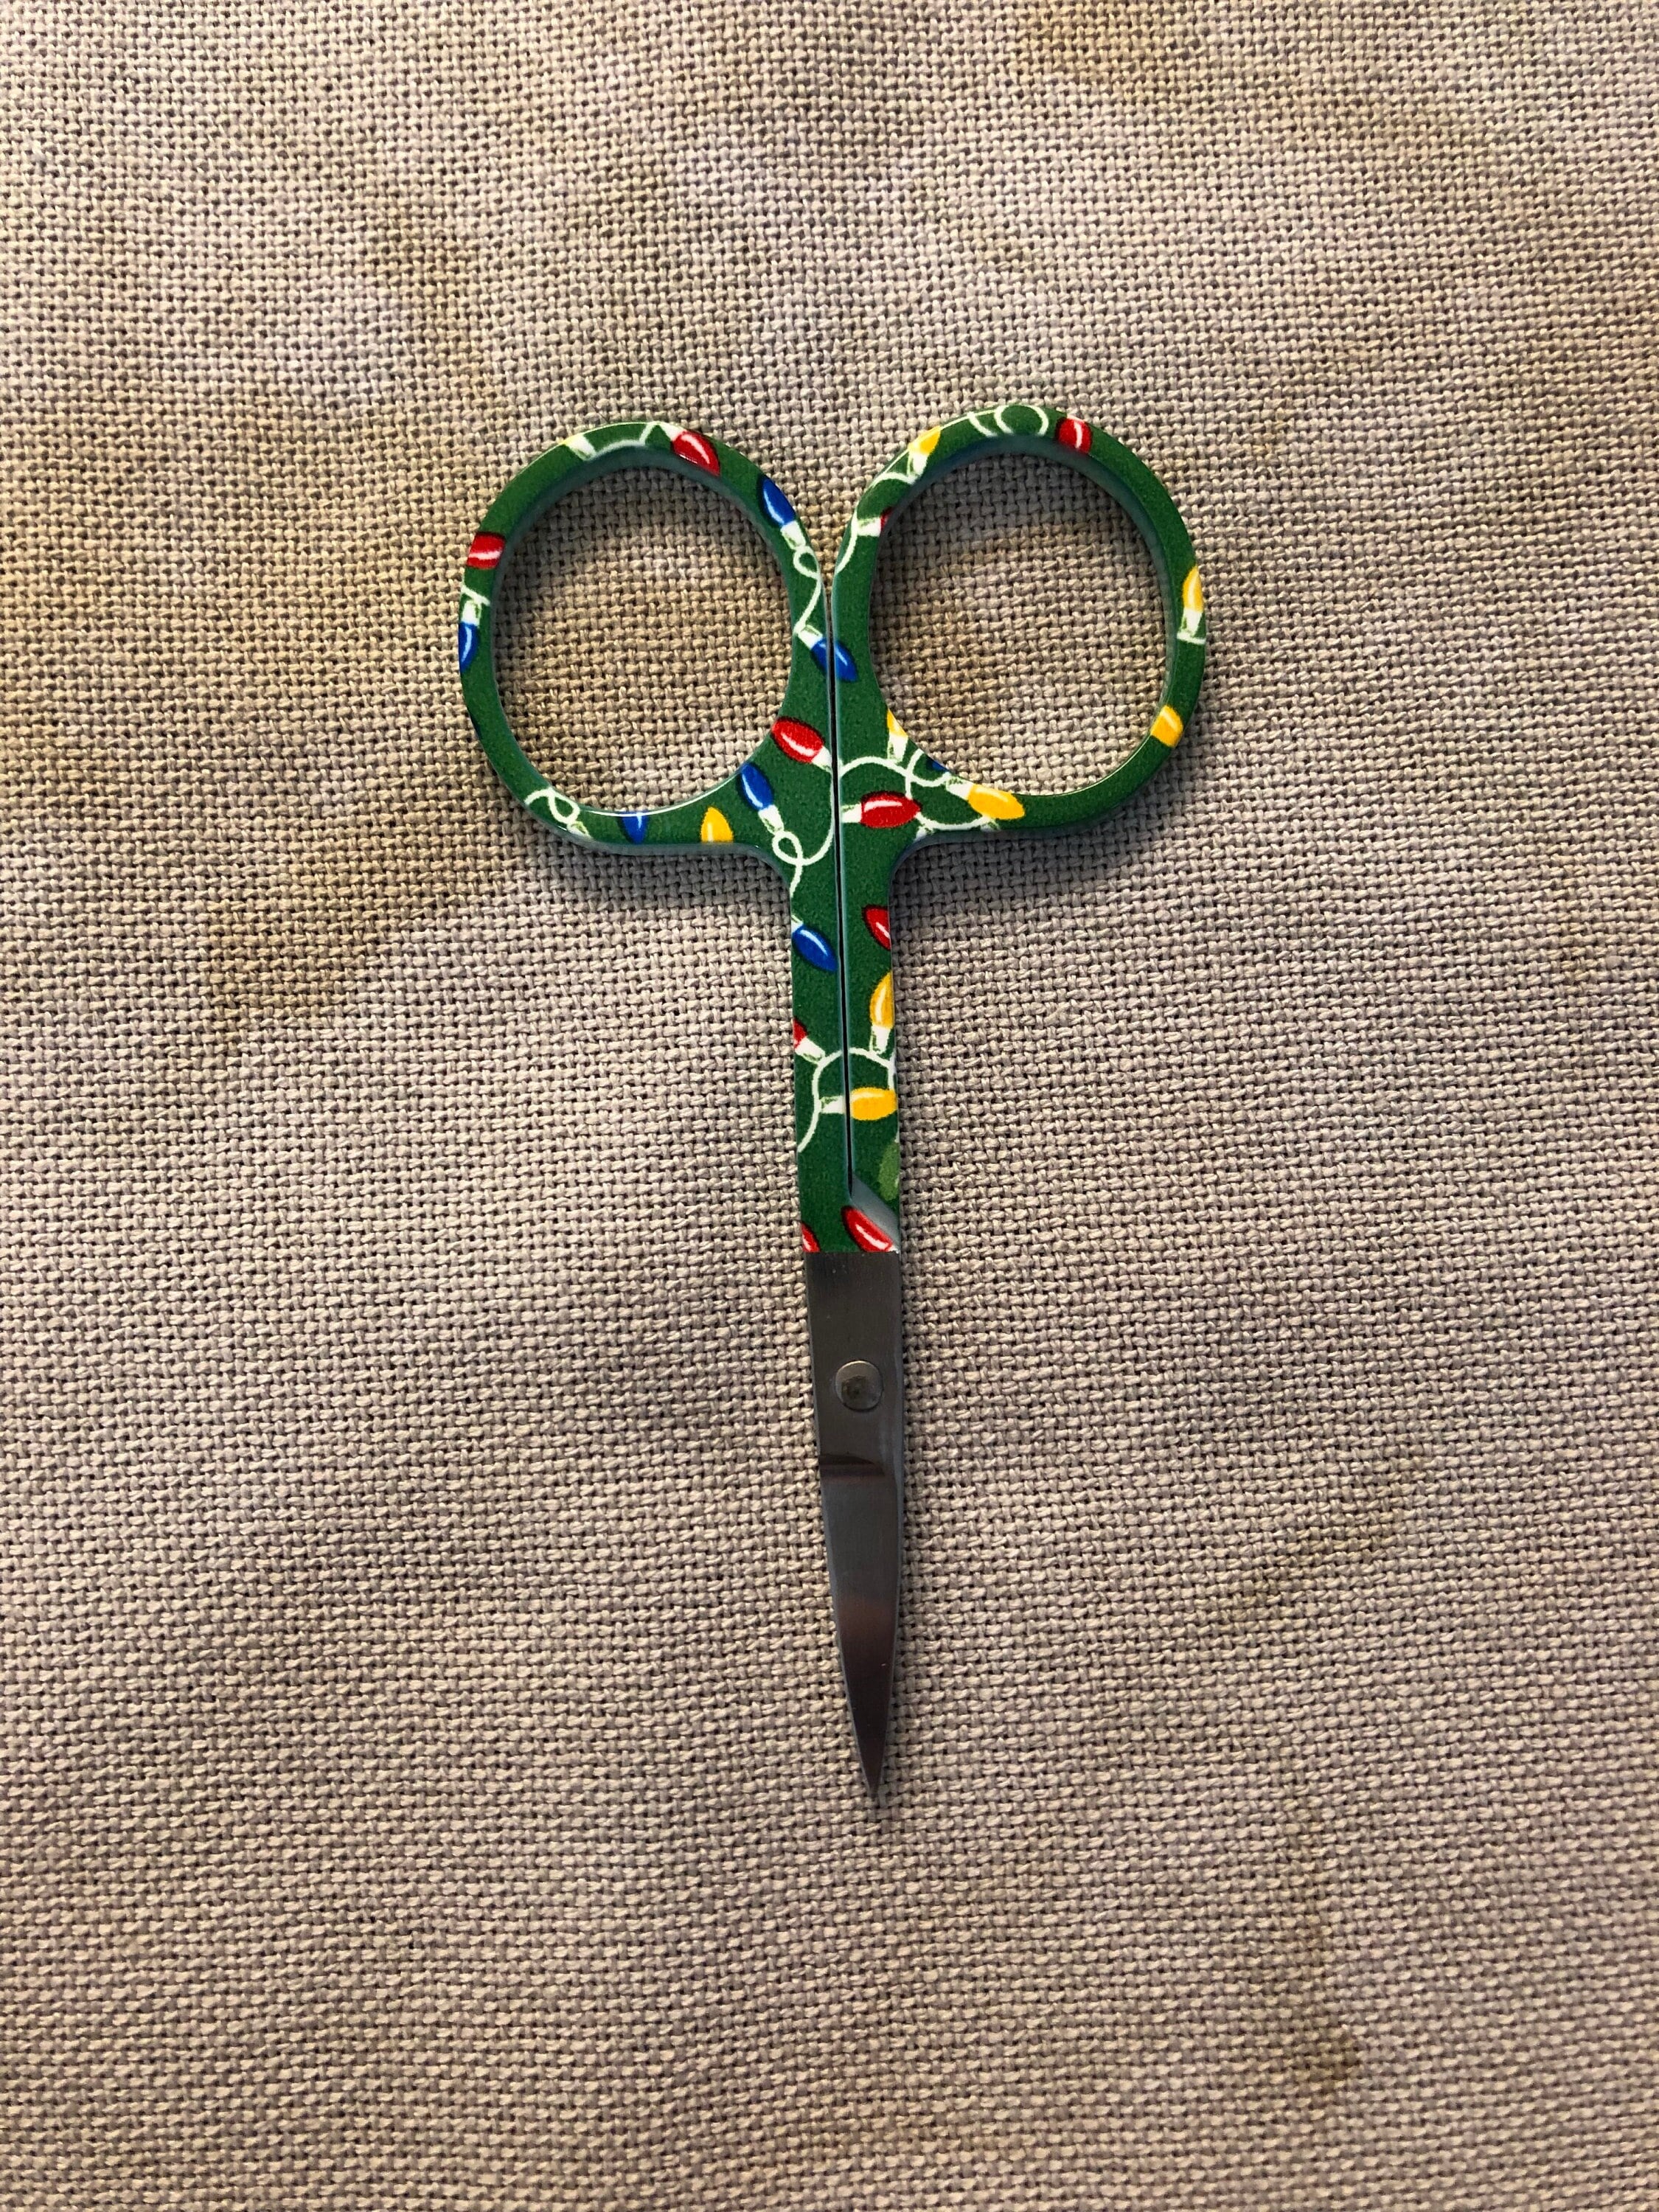 Gingerbread Embroidery Thread Scissors, Sewing Scissors, Christmas Scissors